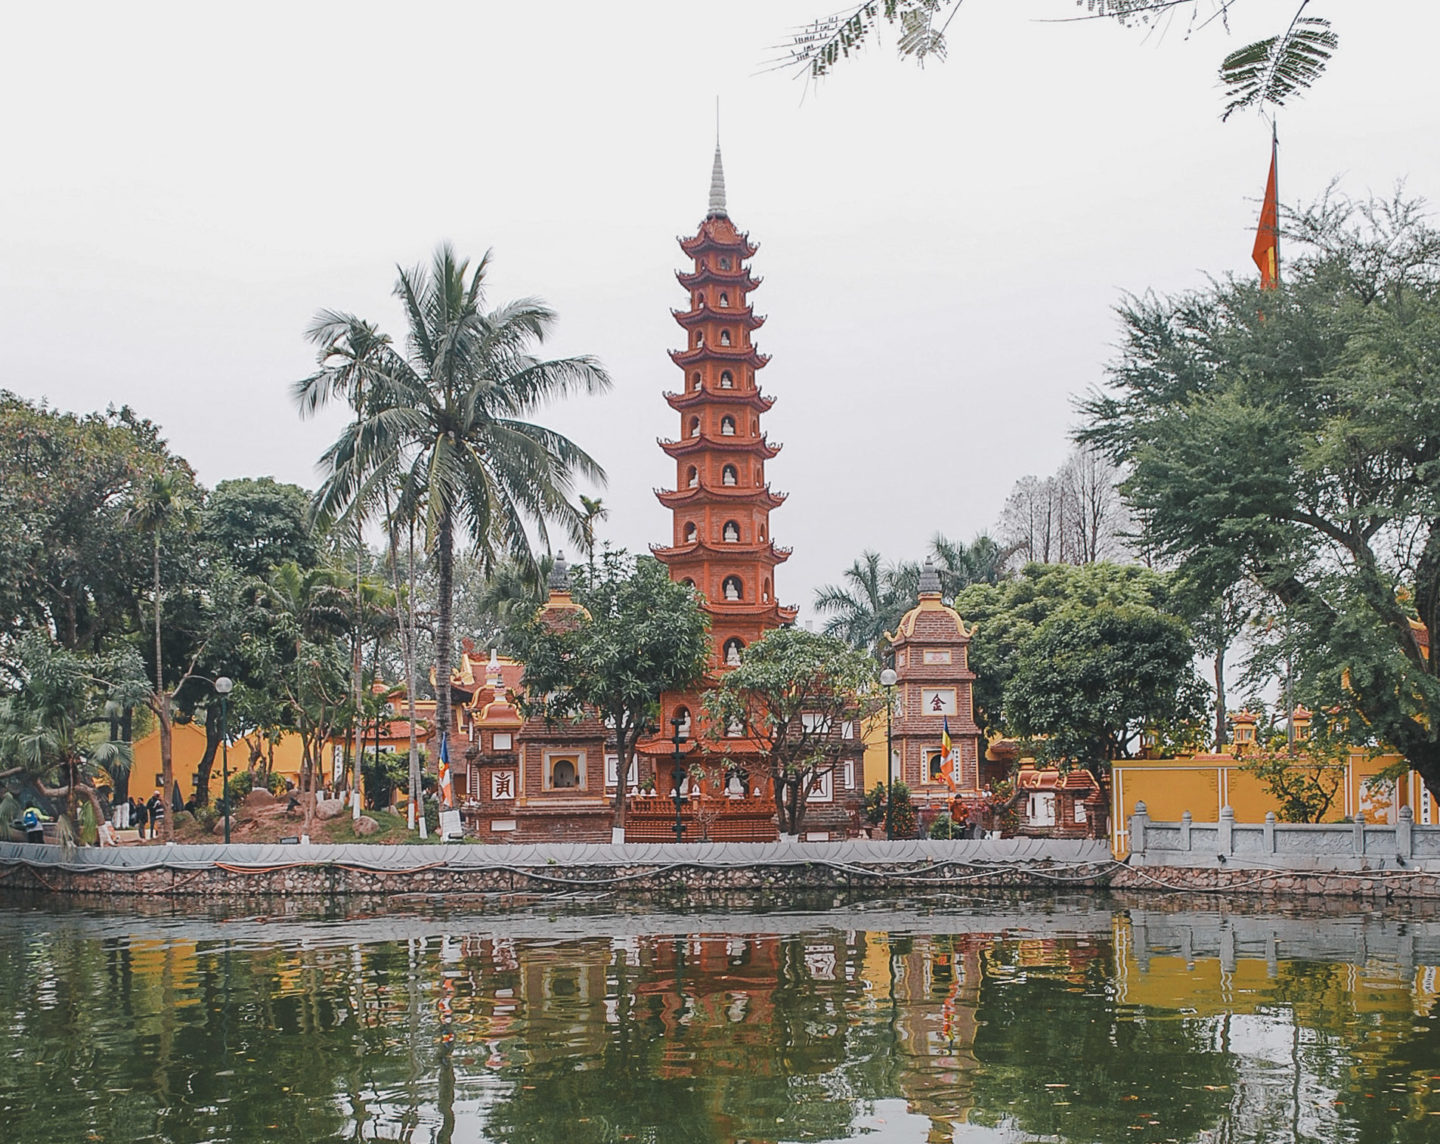 Hanoi Tourism: Tran Quoc Pagoda